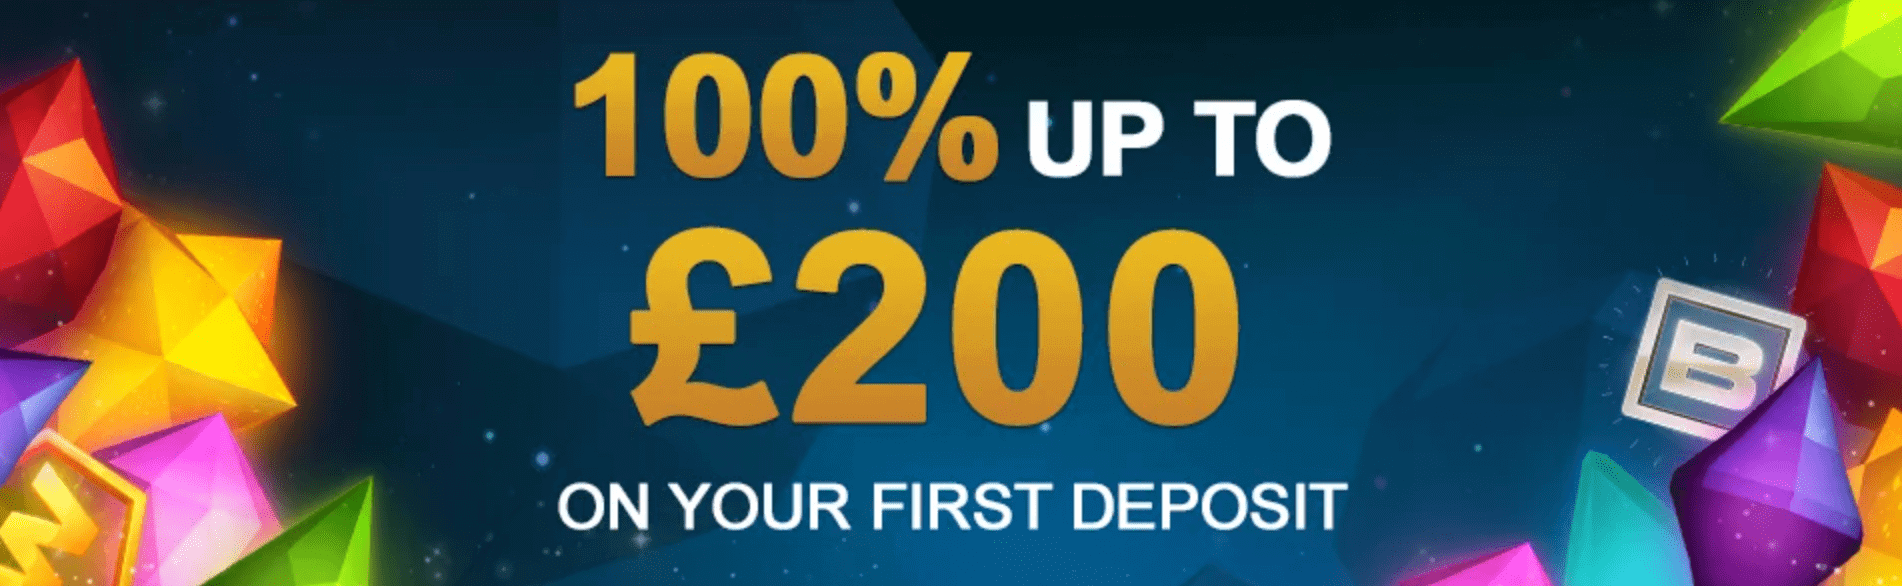 100% deposit bonus up to £200 - Welcome bonus with videoslots